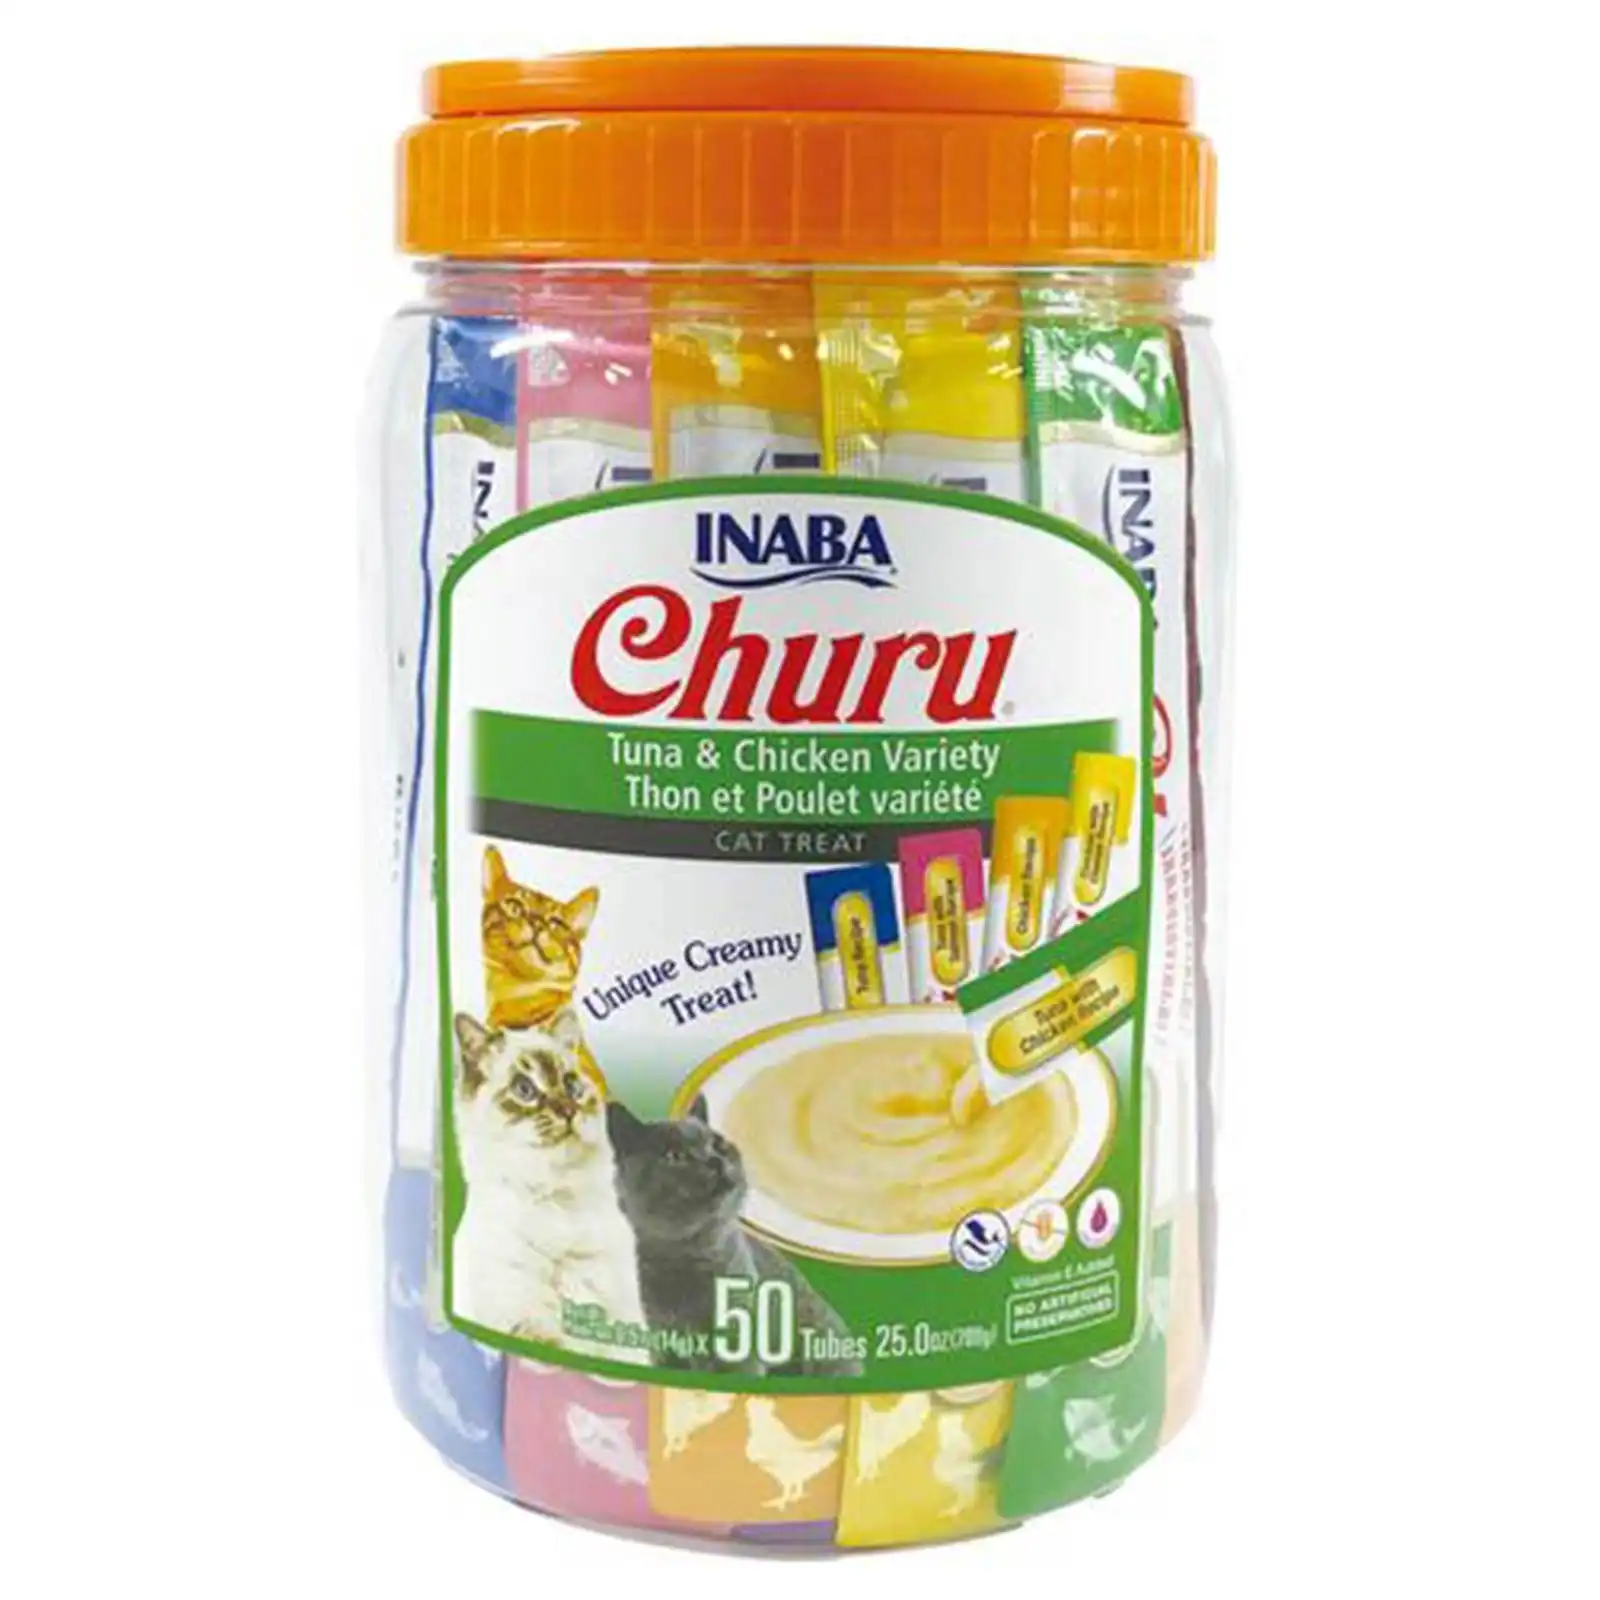 Inaba Churu Creamy Puree Tuna And Chicken Varieties Tub Cat Treat Tubes 50 Pack 700gm